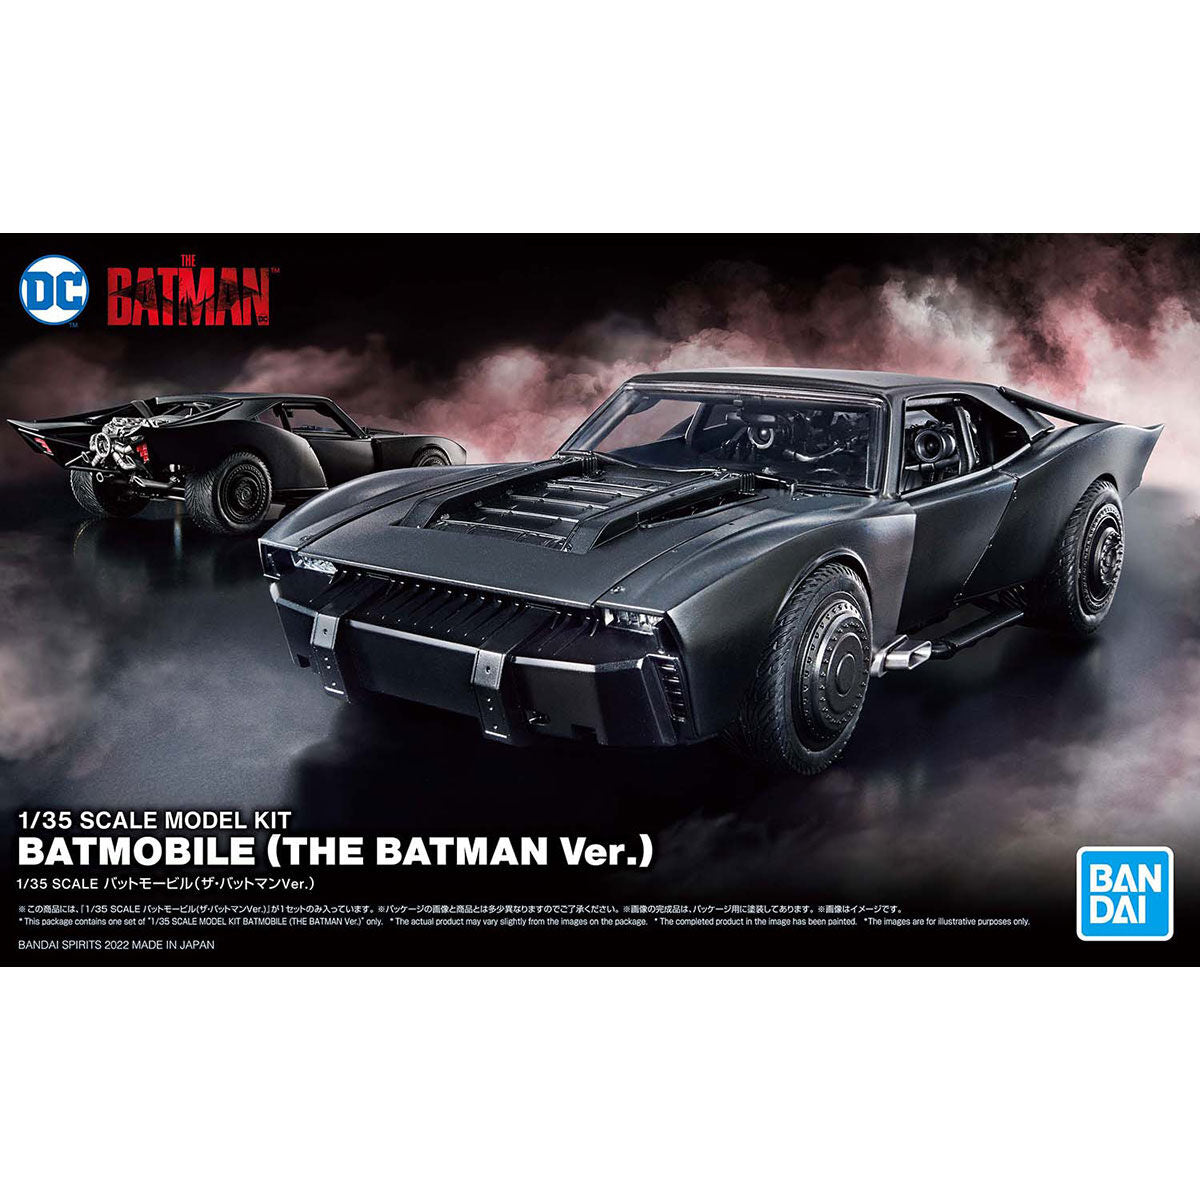 Batman - 1/35 Scale Batmobile (The Batman Ver.) - Model Kit, Franchise: Batman, Brand: Bandai, Release Date: 2022-03-19, Type: Model Kit, Nippon Figures